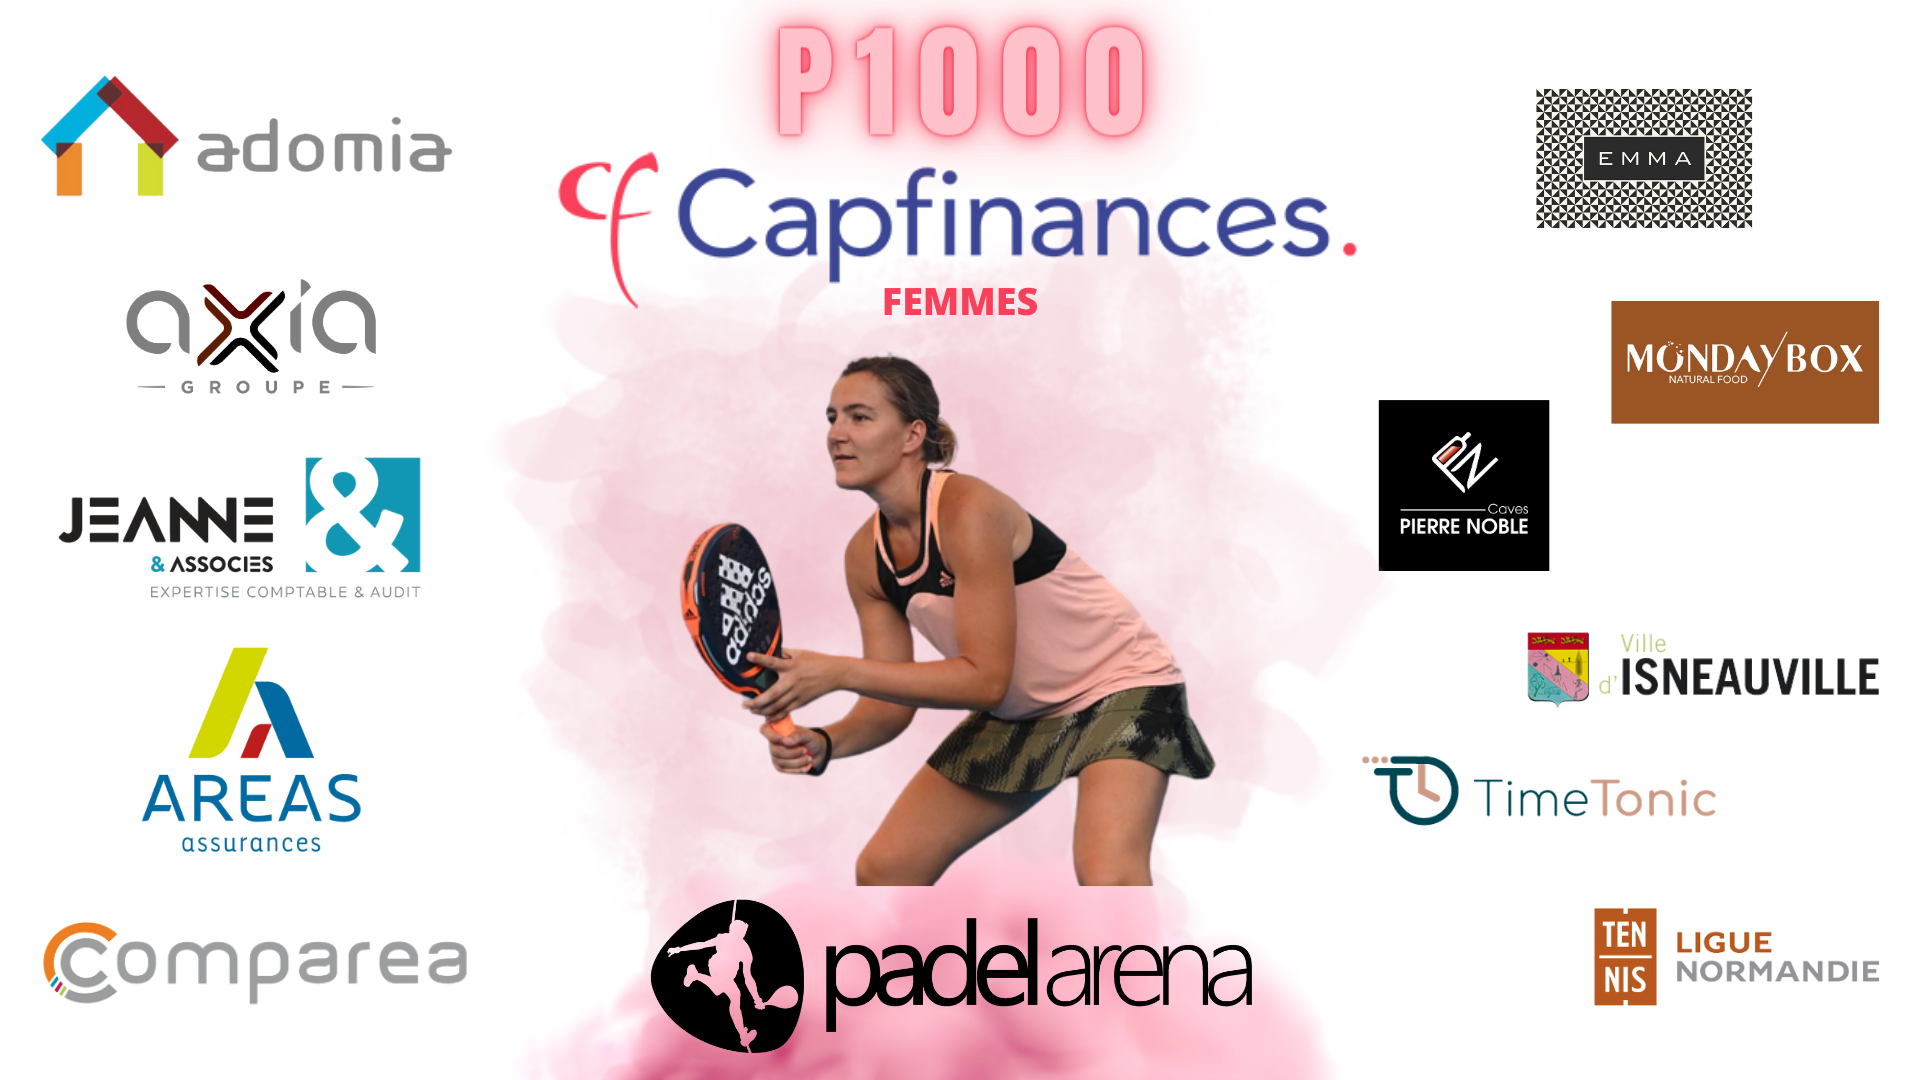 P1000 Open Cap Finance – Padel Arena – Tabeller og programmering